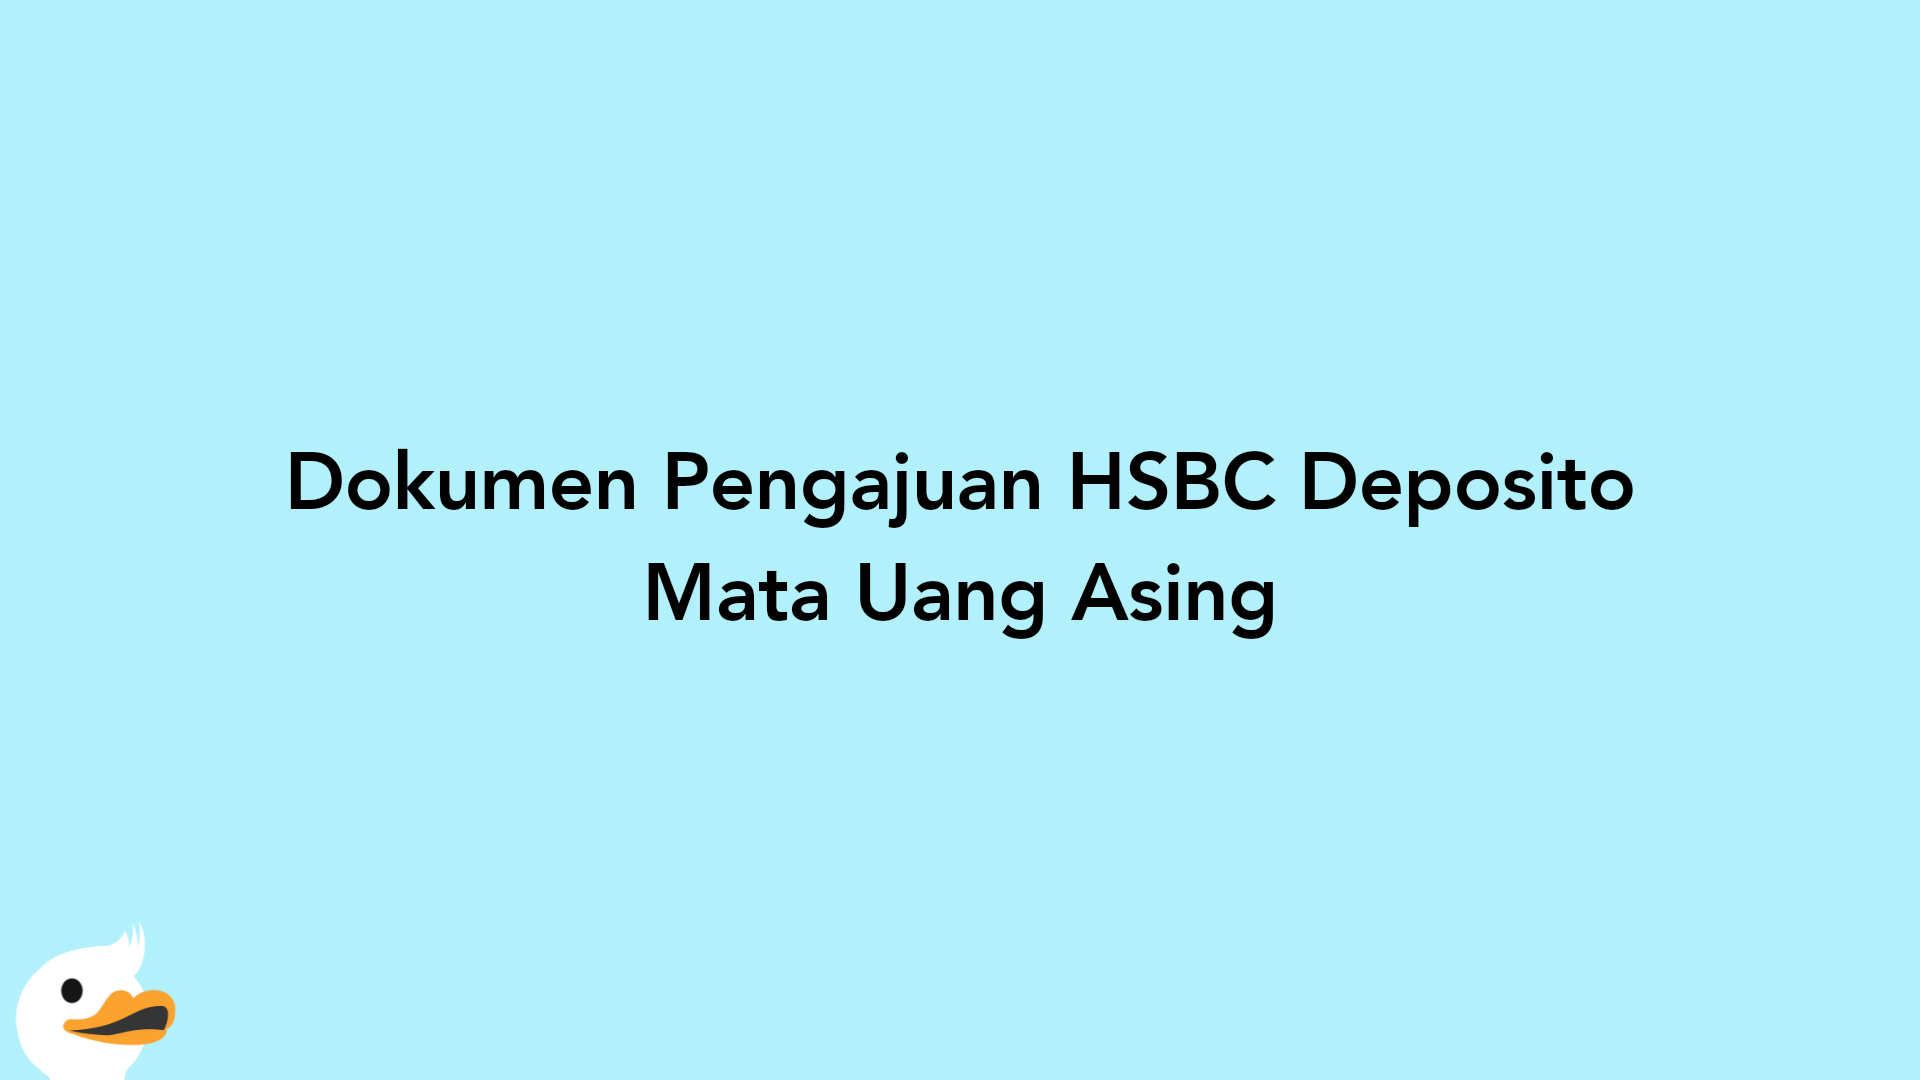 Dokumen Pengajuan HSBC Deposito Mata Uang Asing